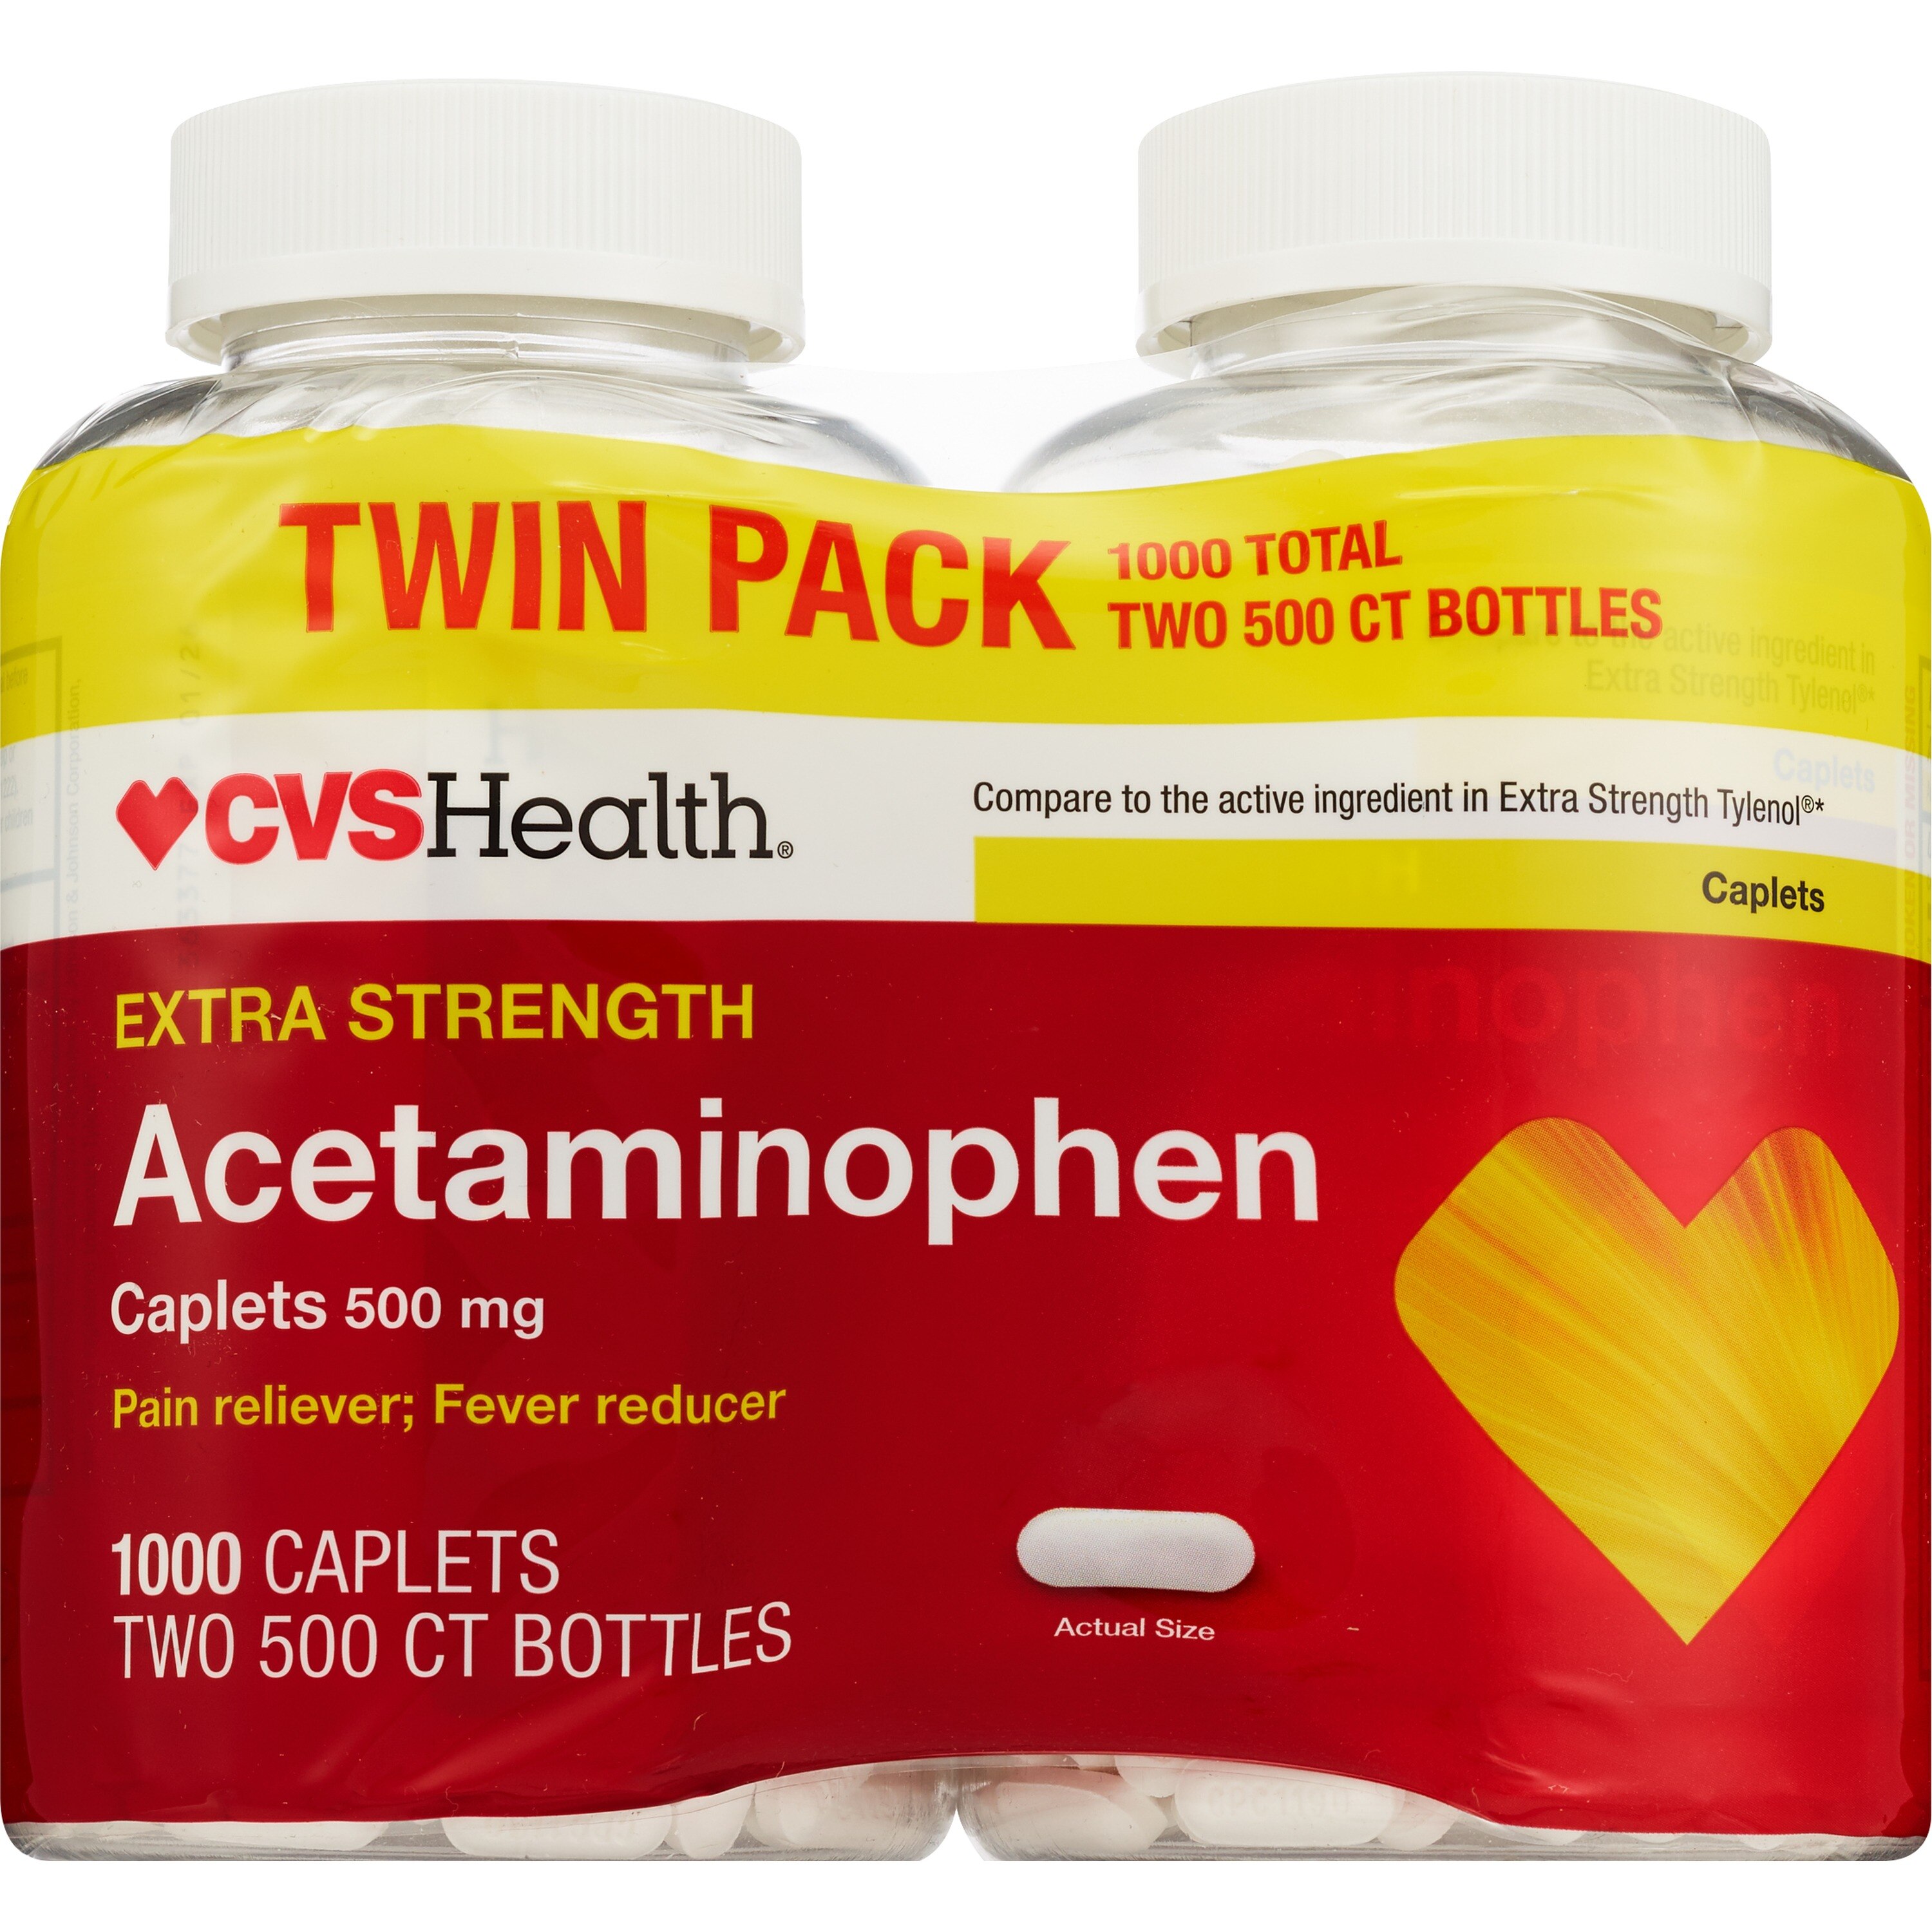 CVS Health Extra Strength Acetaminophen Pain Relief 500 MG Caplets, 1000 ct - 500 ct